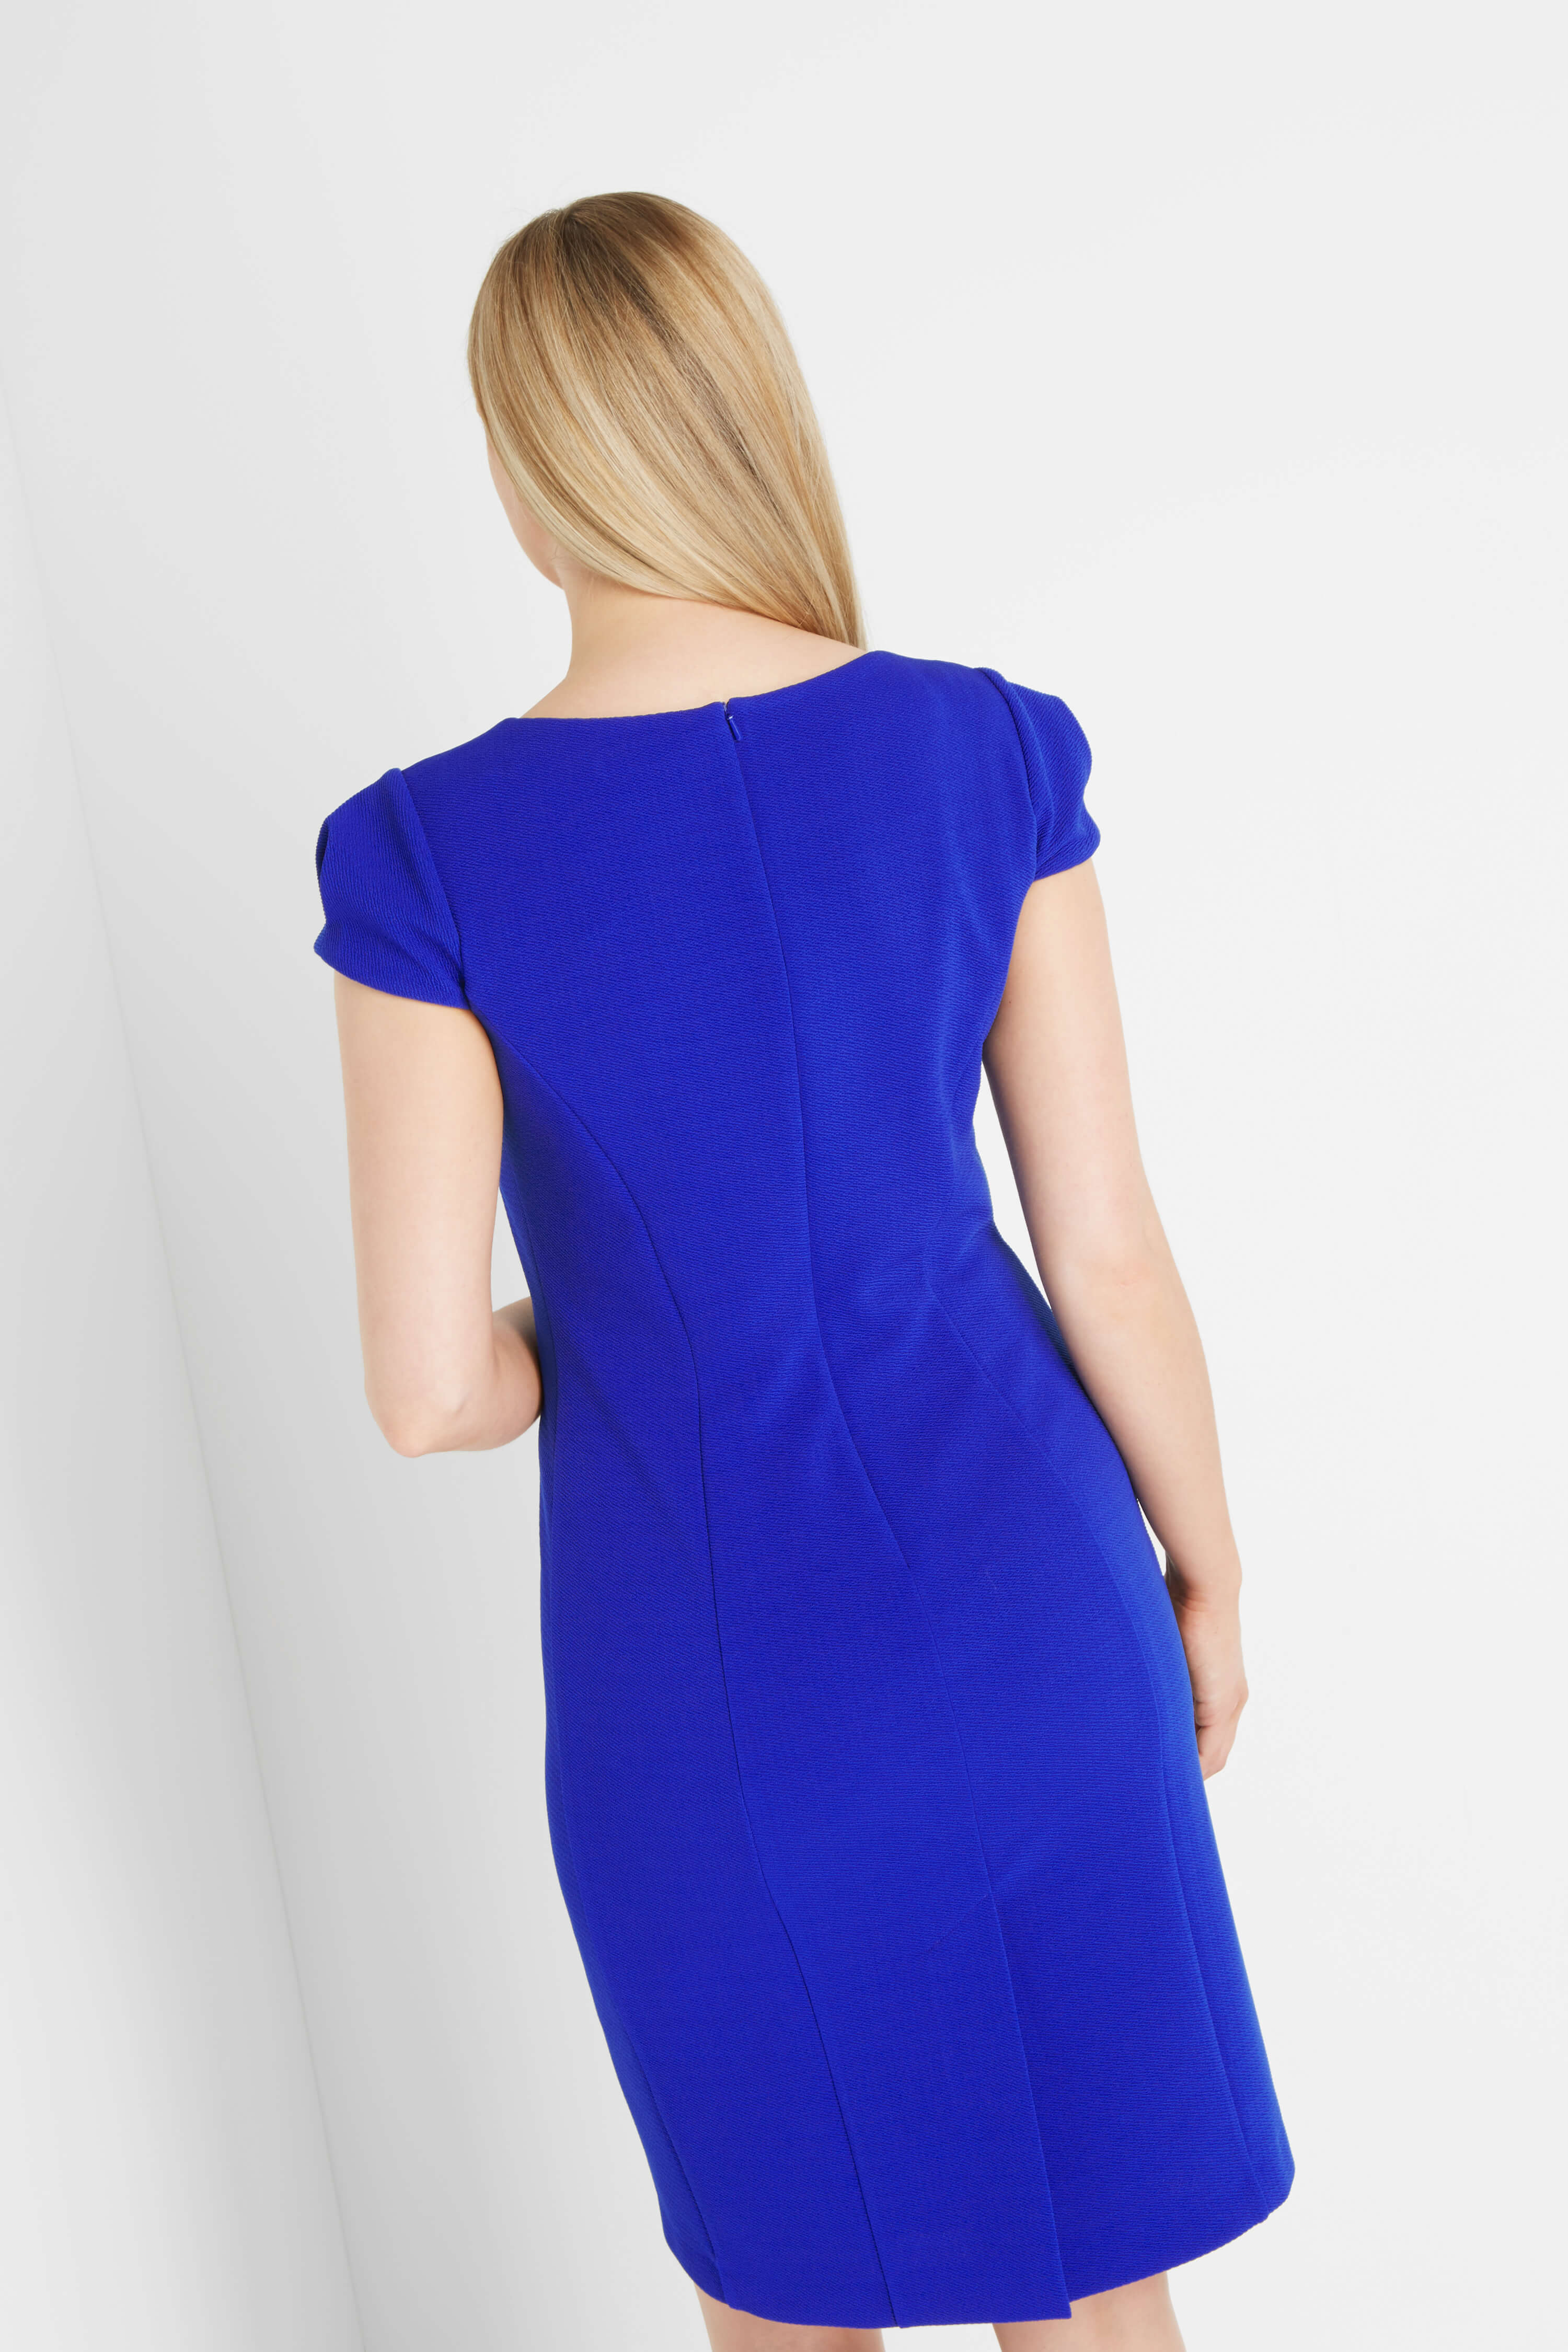 V Neck Textured Shift Dress in ROYAL BLUE - Roman Originals UK